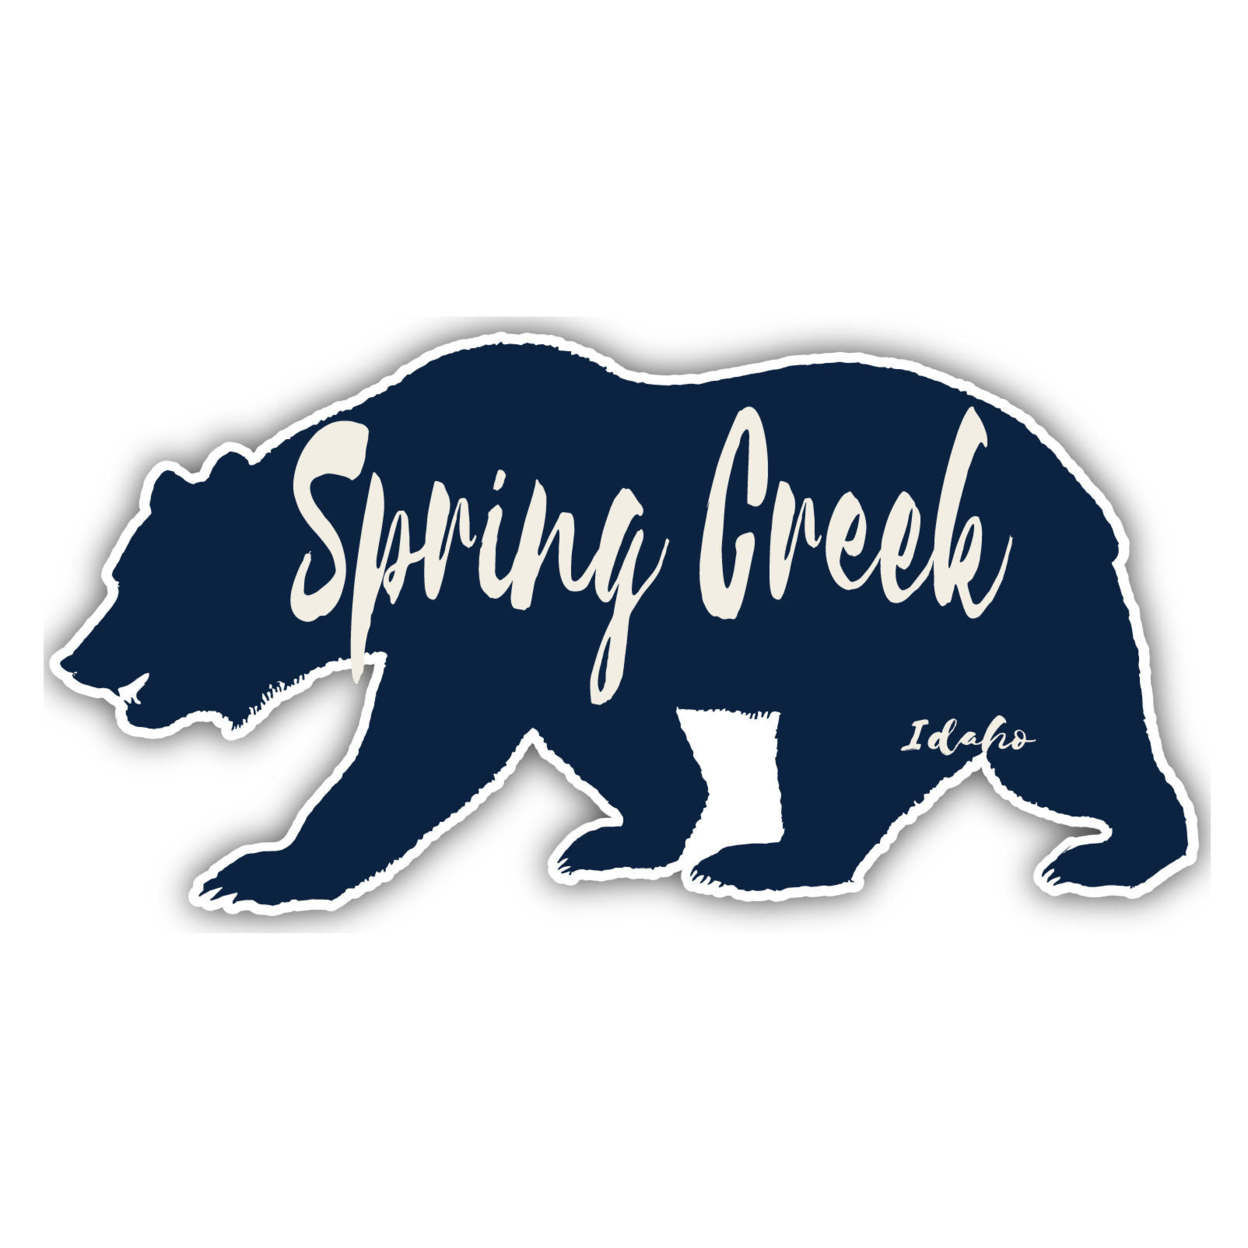 Spring Creek Idaho Souvenir Decorative Stickers (Choose Theme And Size) - Single Unit, 4-Inch, Bear